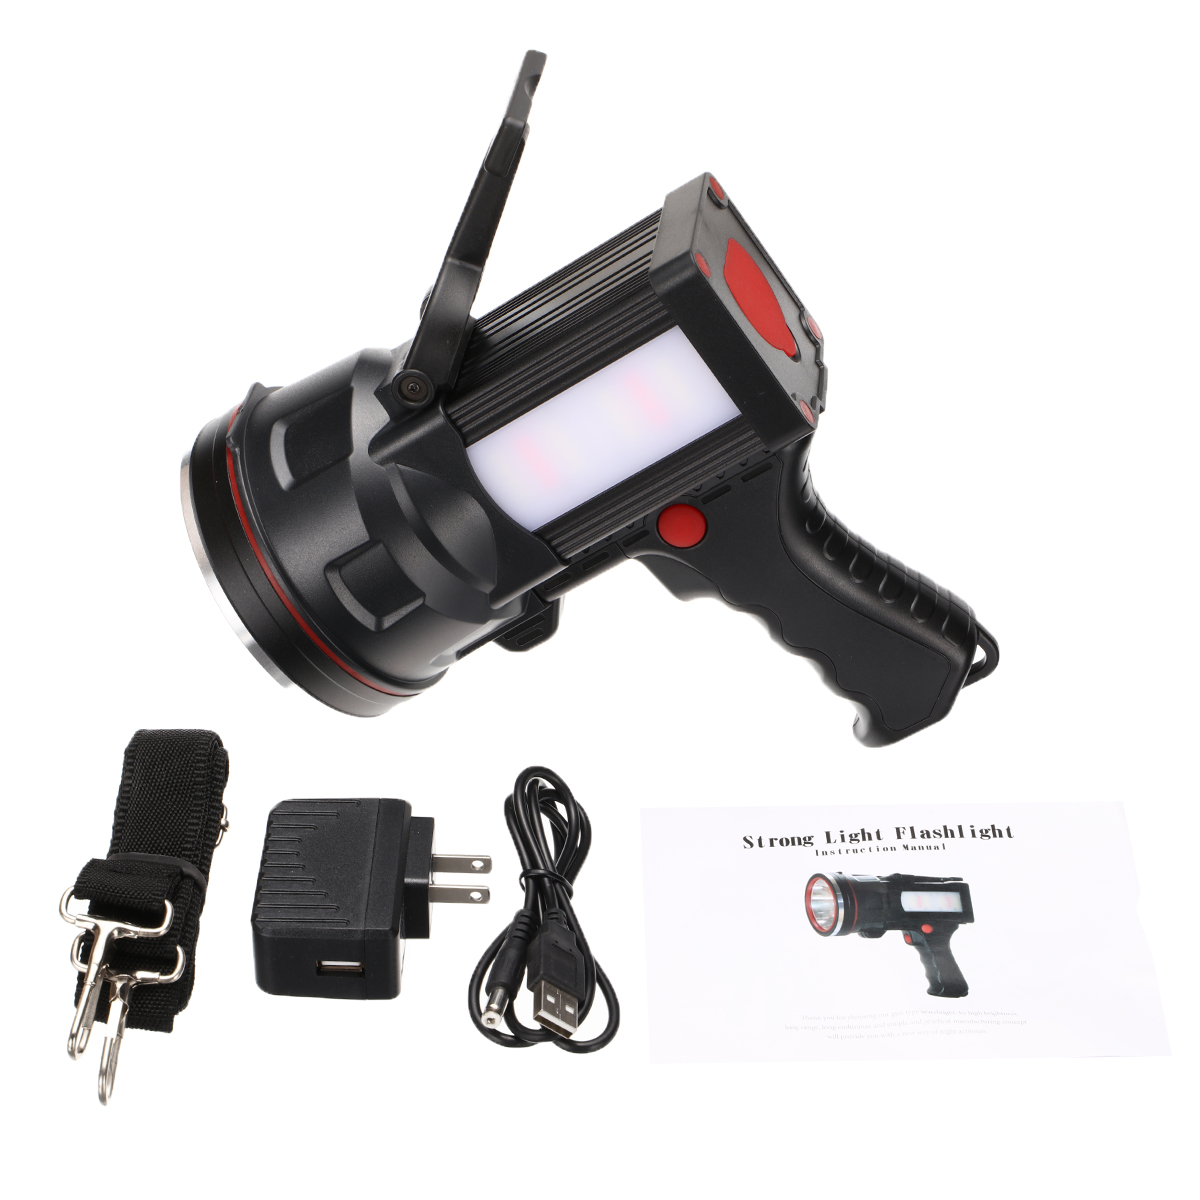 USB-Rechargeable-Multi-function-Strong-Light-Flashlight-Muti-gear-Waterproof-Handheld-Spotlight-for--1845304-10